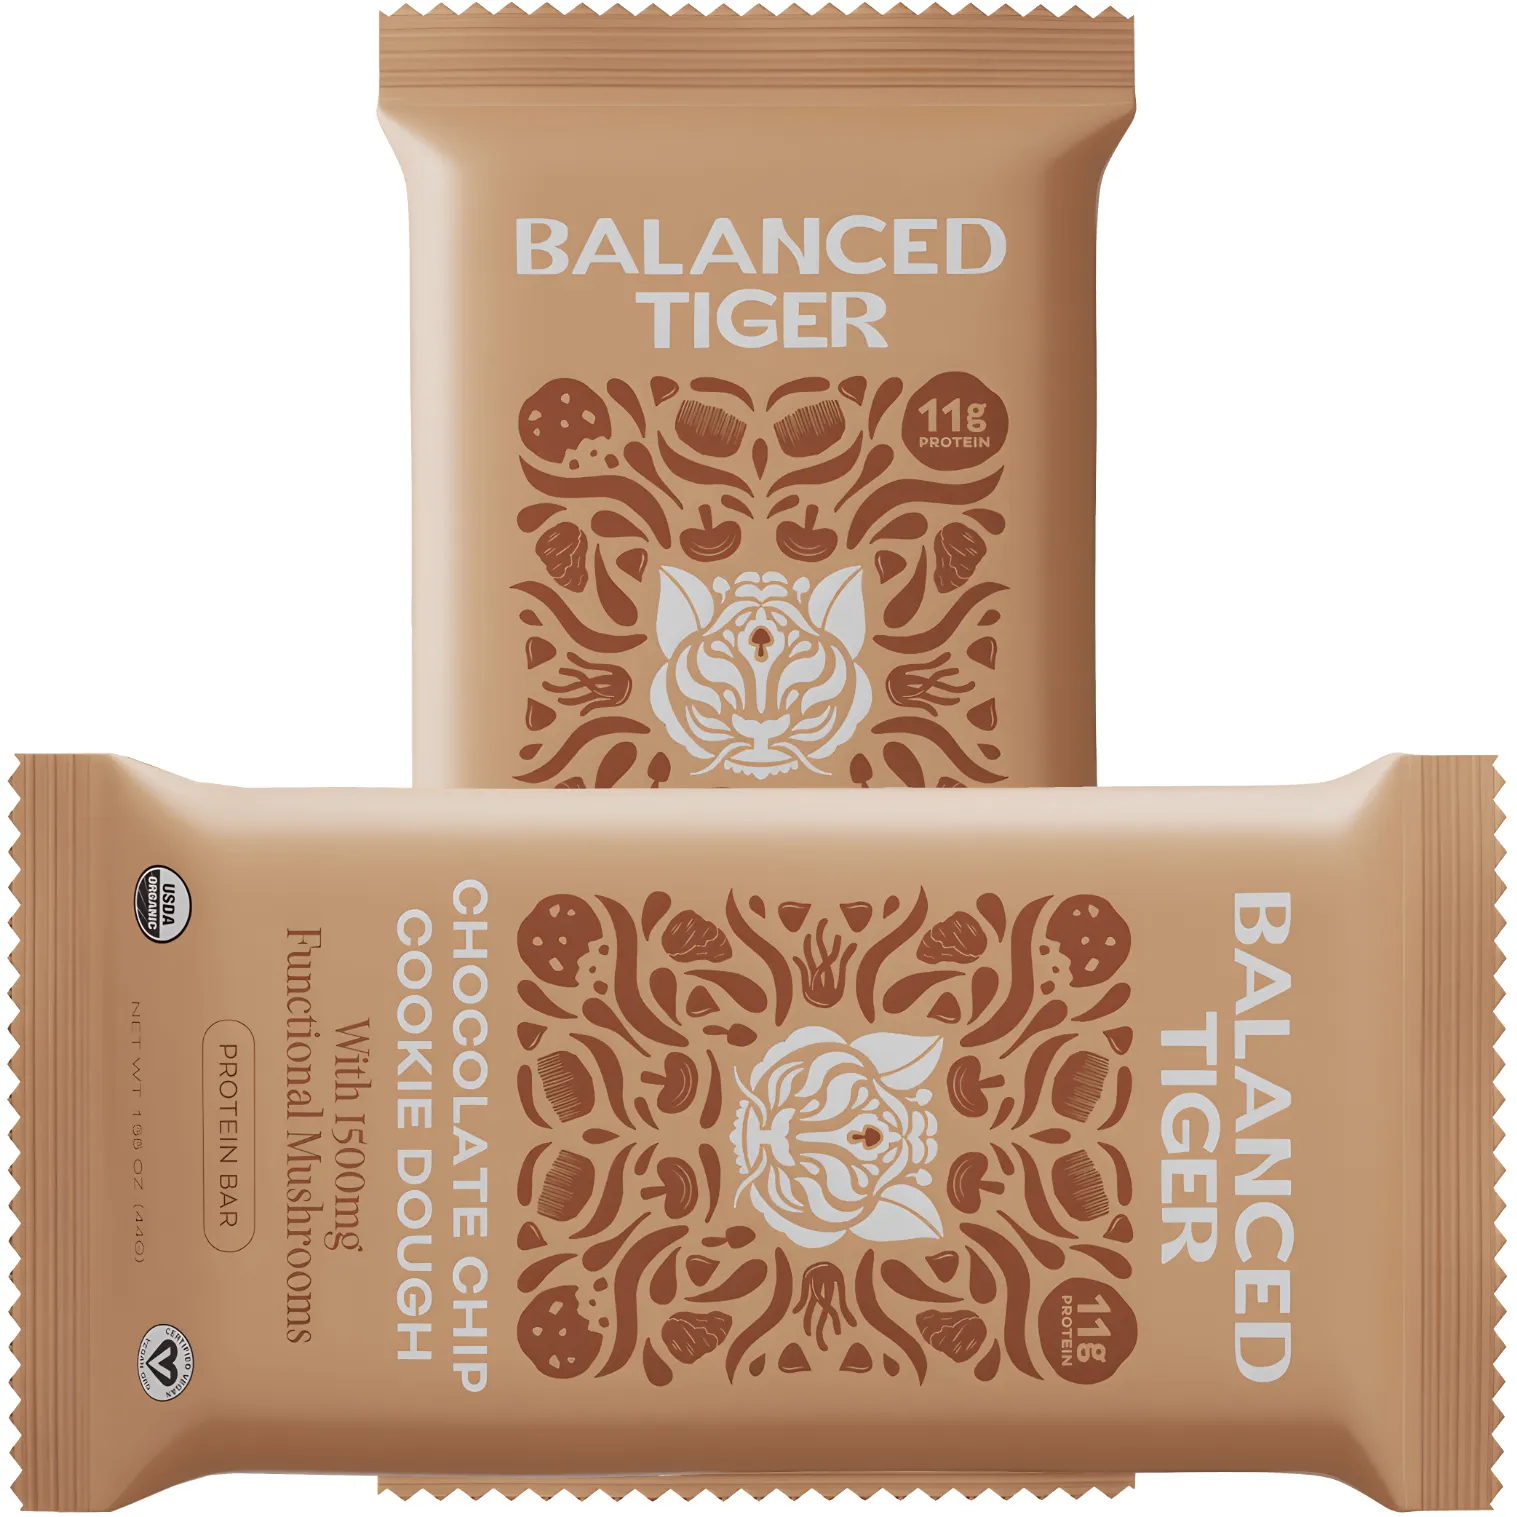 Free Balanced Tiger Protein Bar